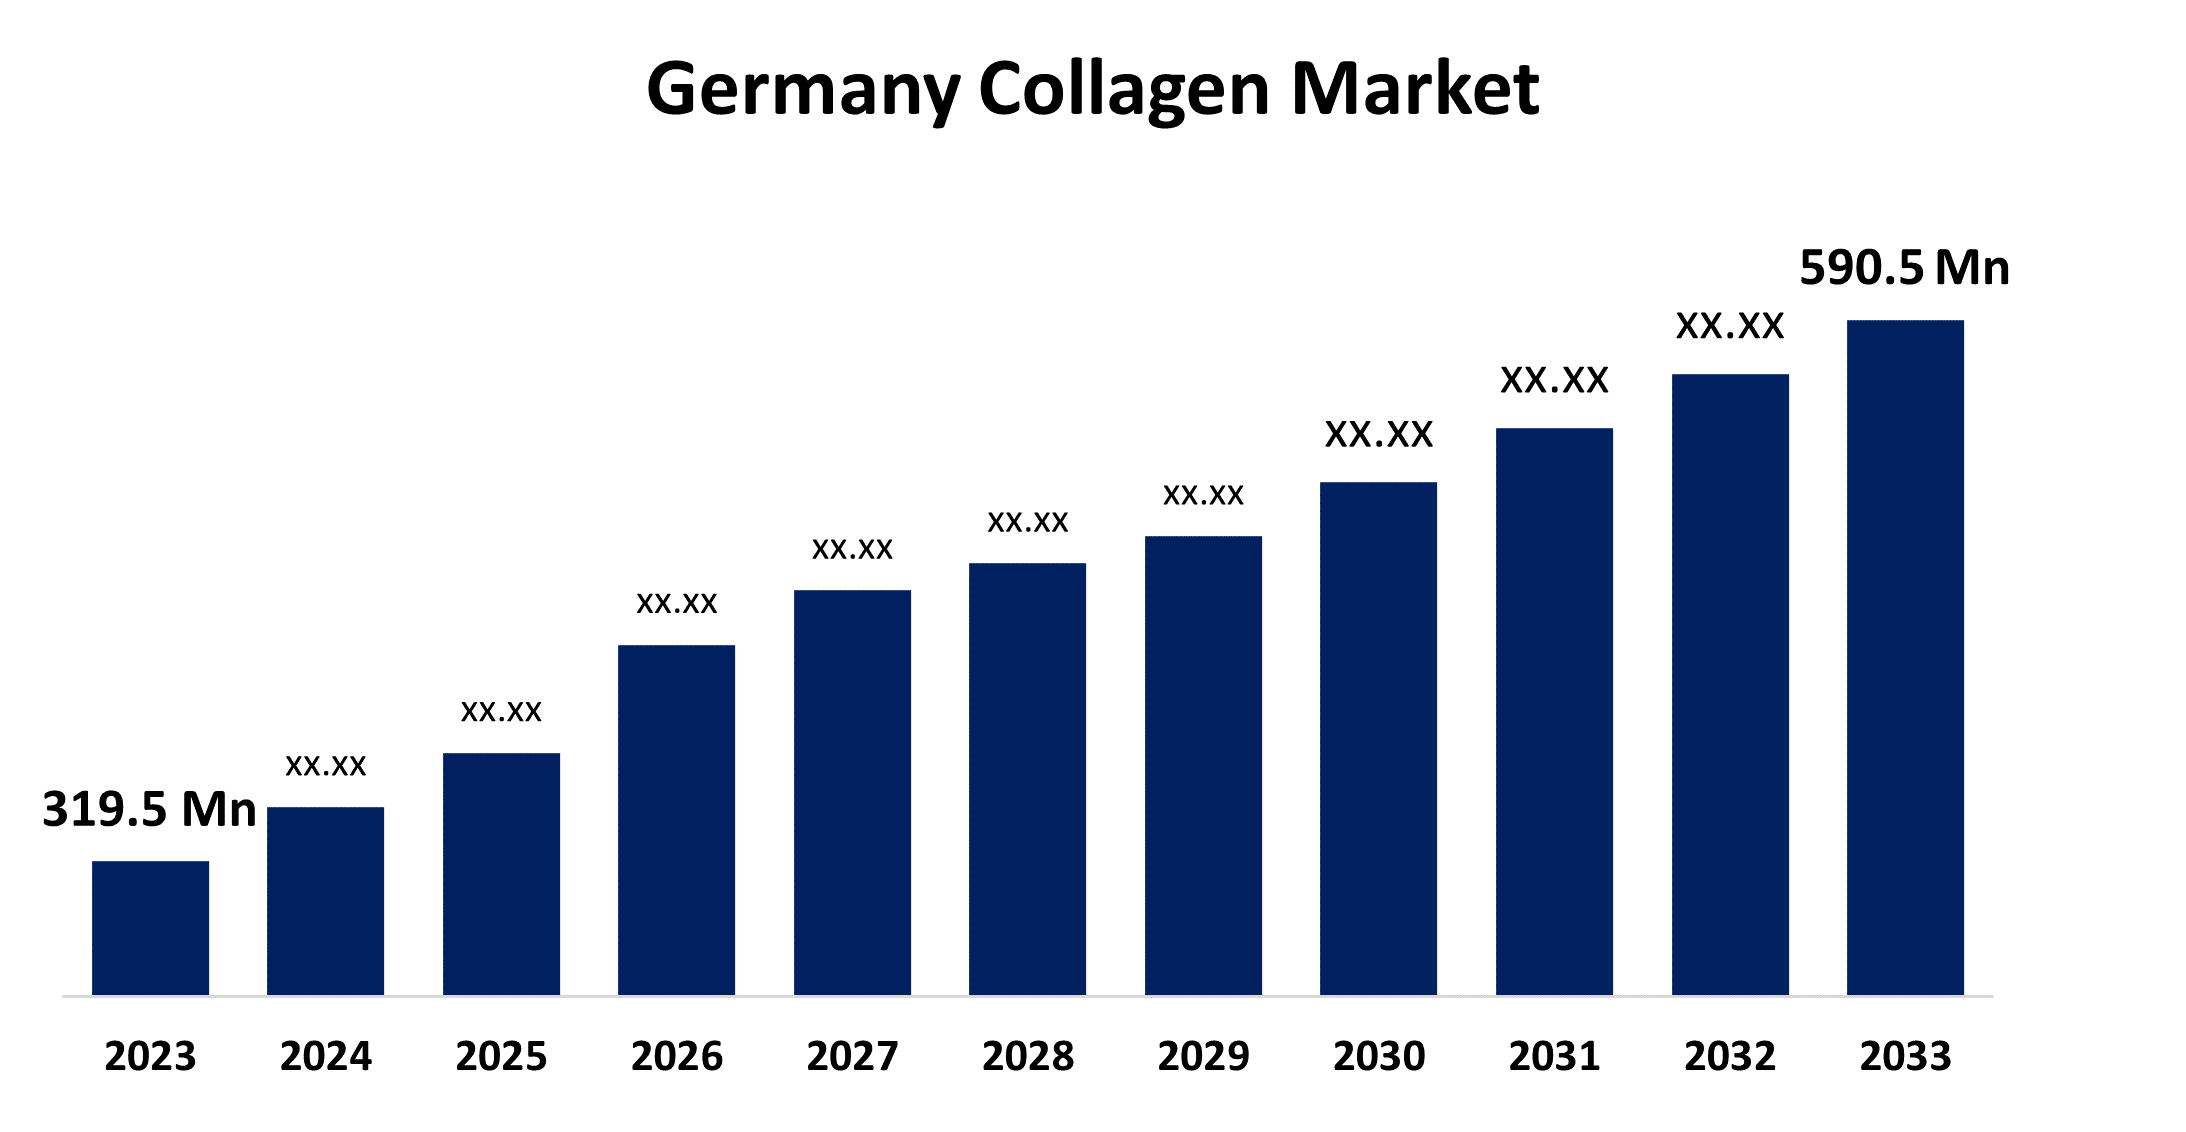 Germany Collagen Market